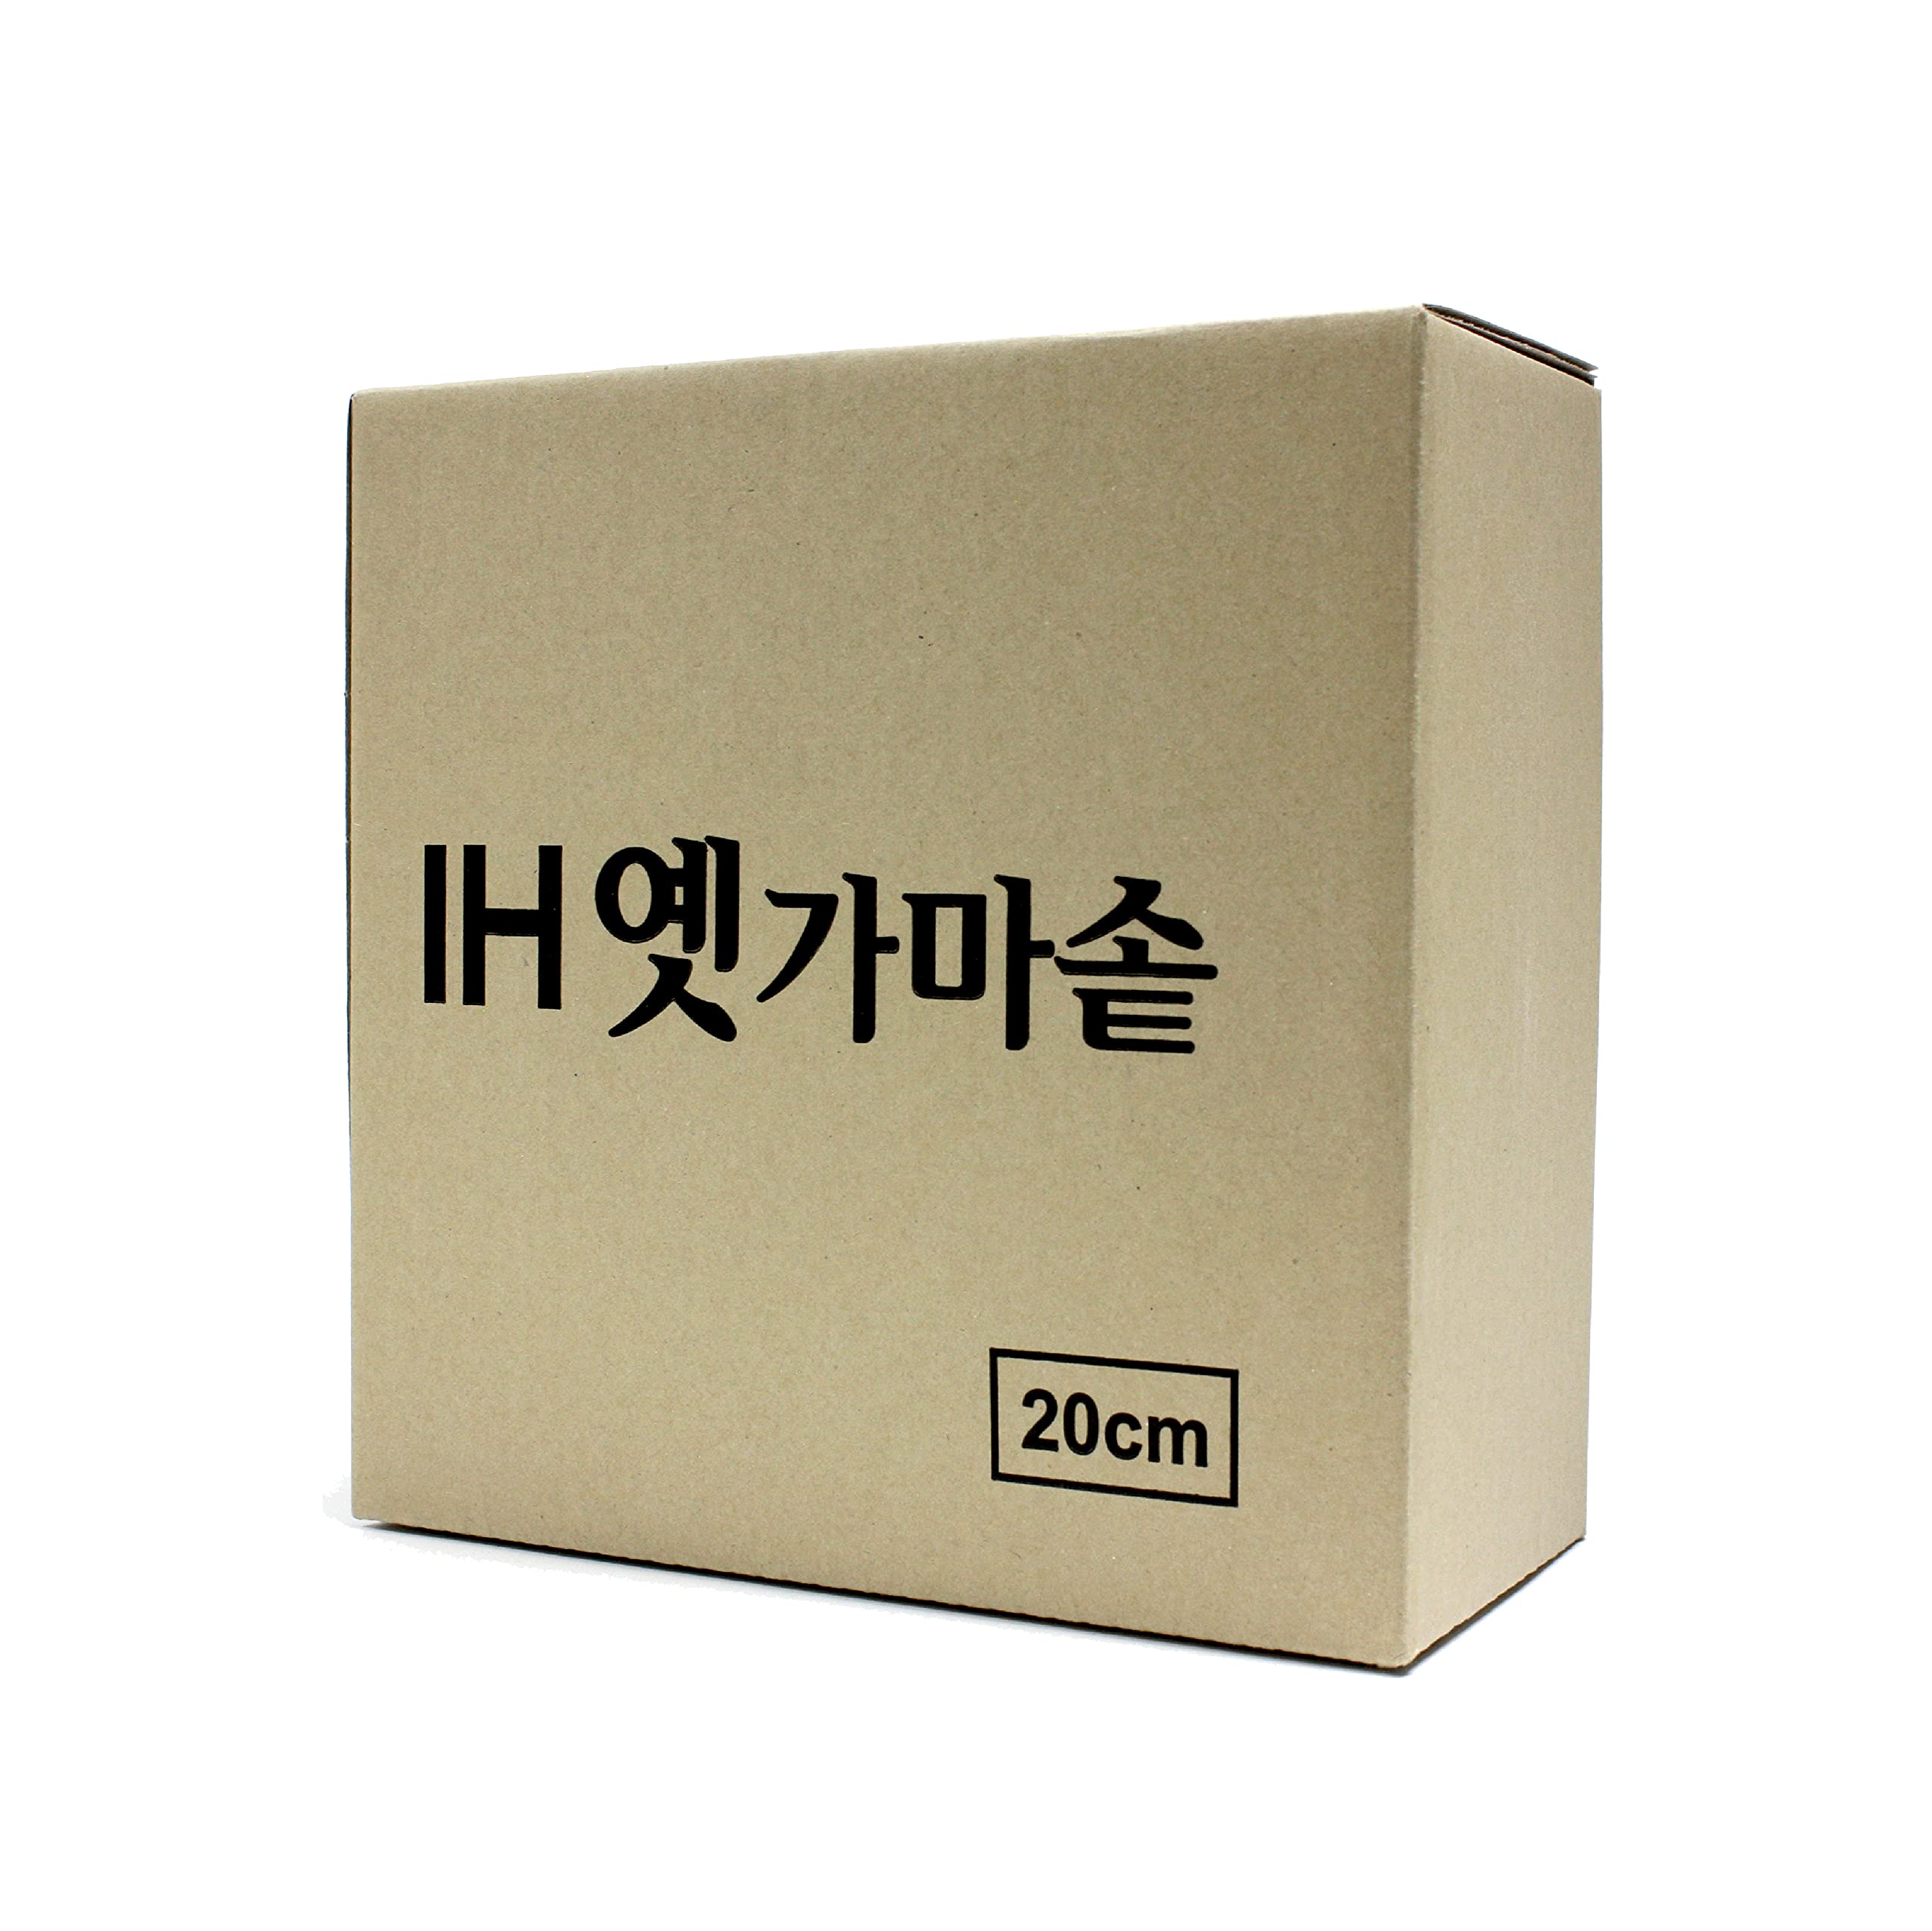 Happywell, IH KOREAN Traditional Iron Pot Rice Gamasot Ceramic Cauldron_Made in Korea_20cm